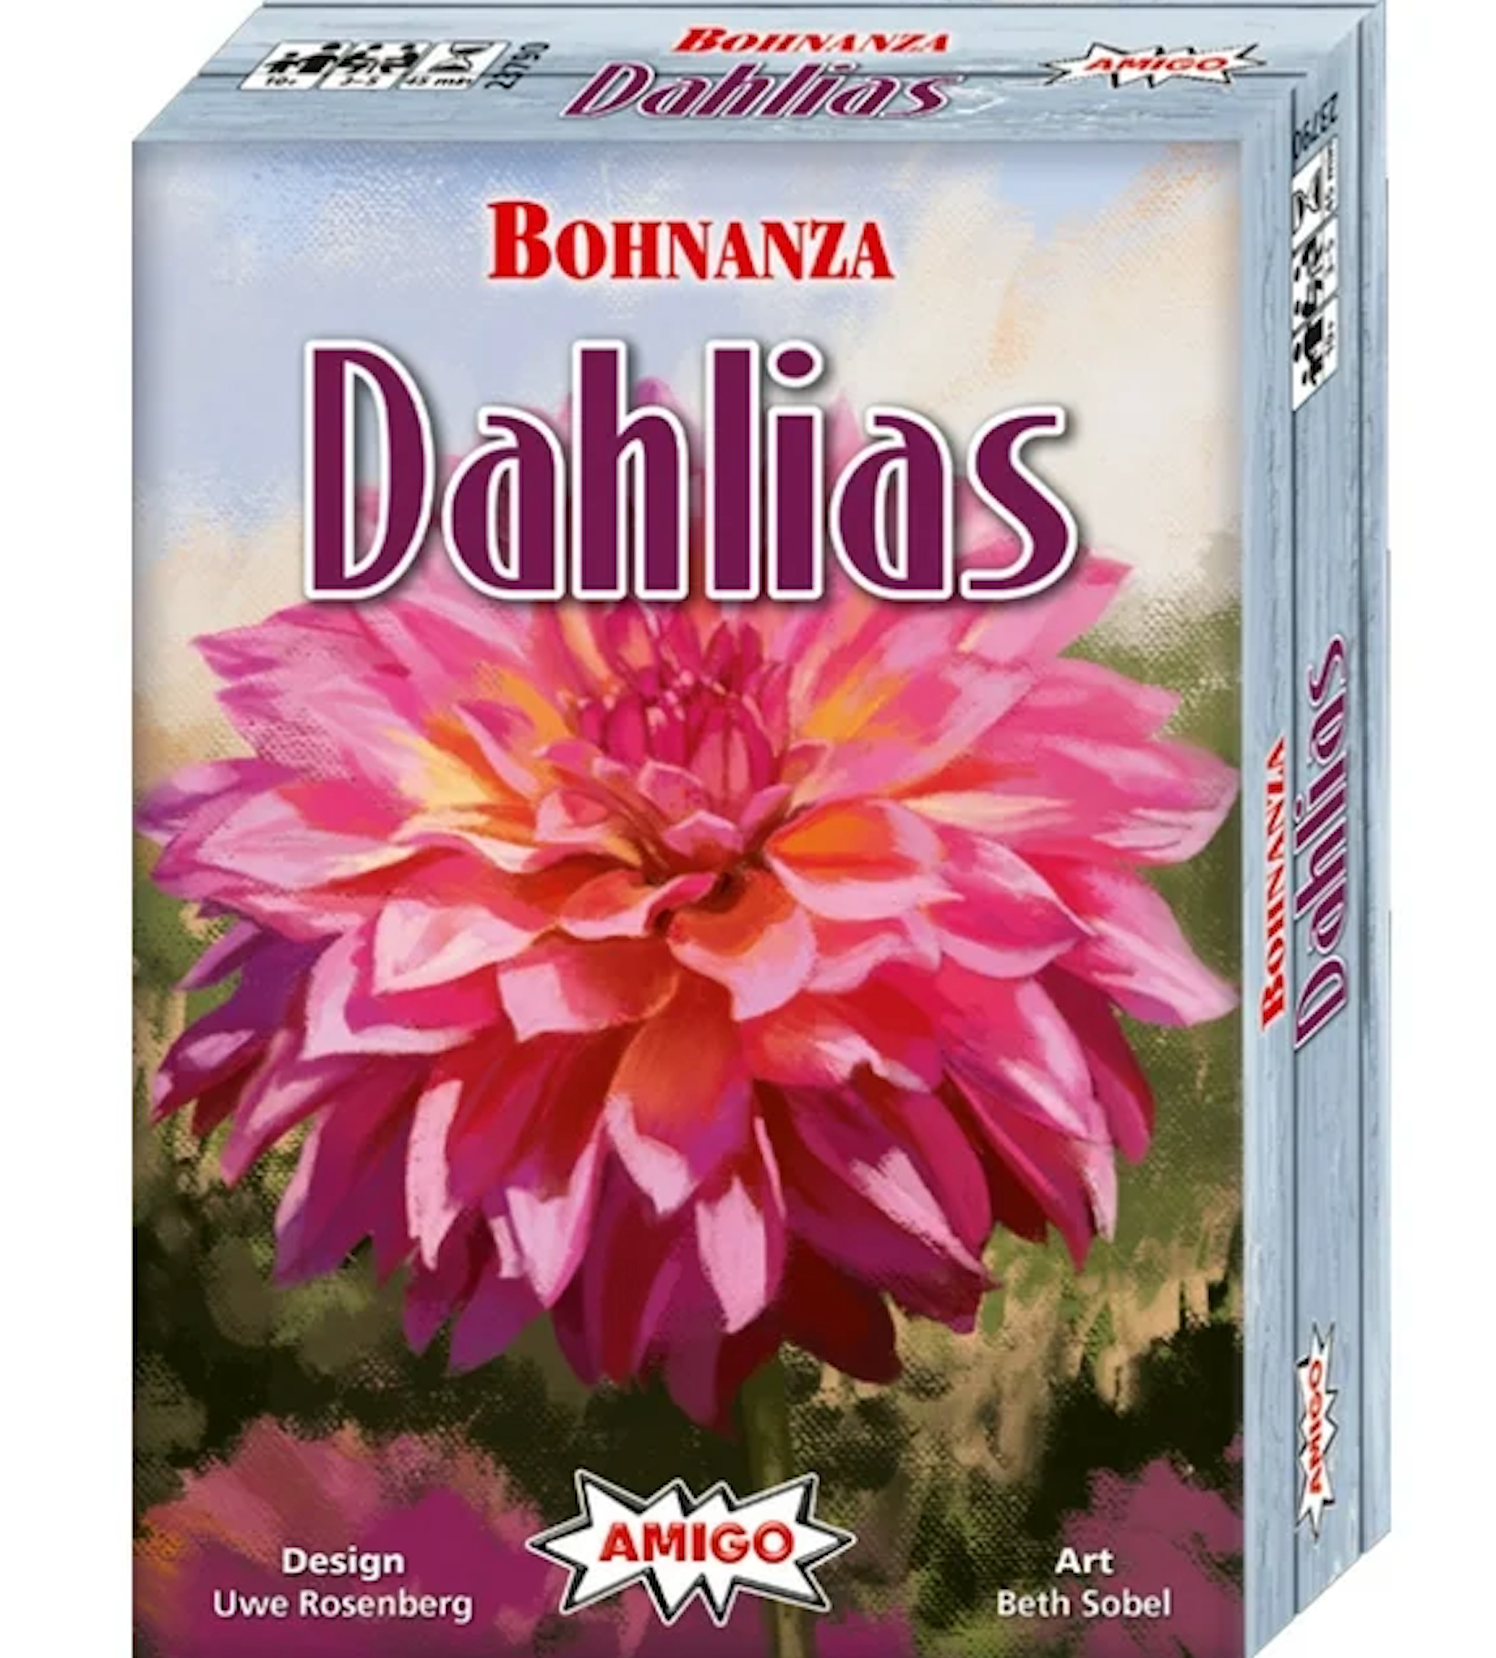 Bohnanza: Dalias